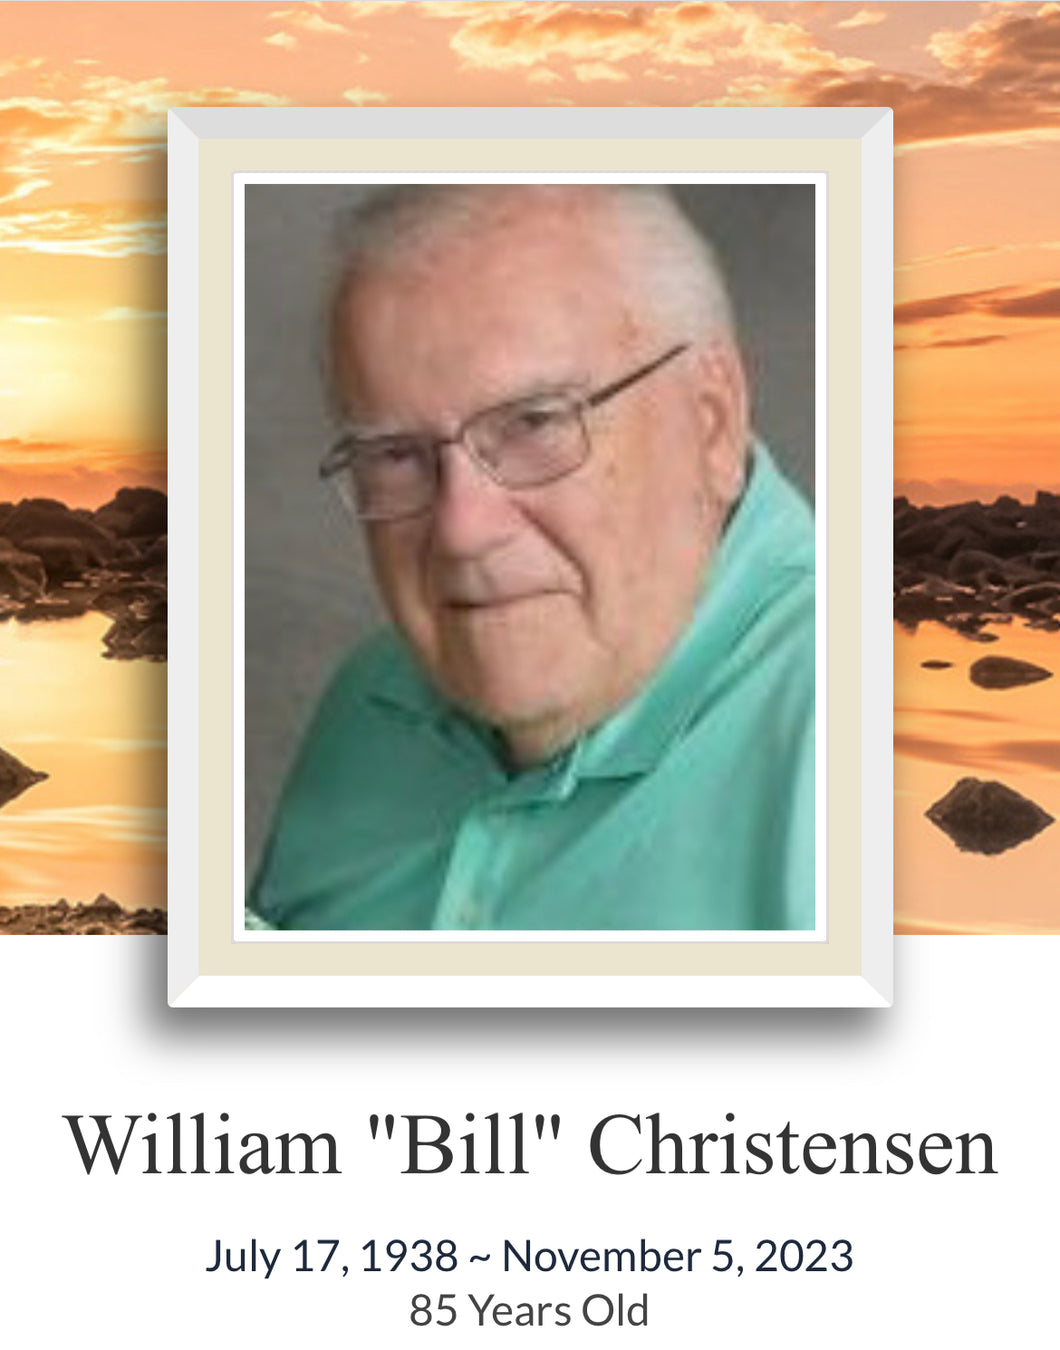 In Honor of Bill Christensen